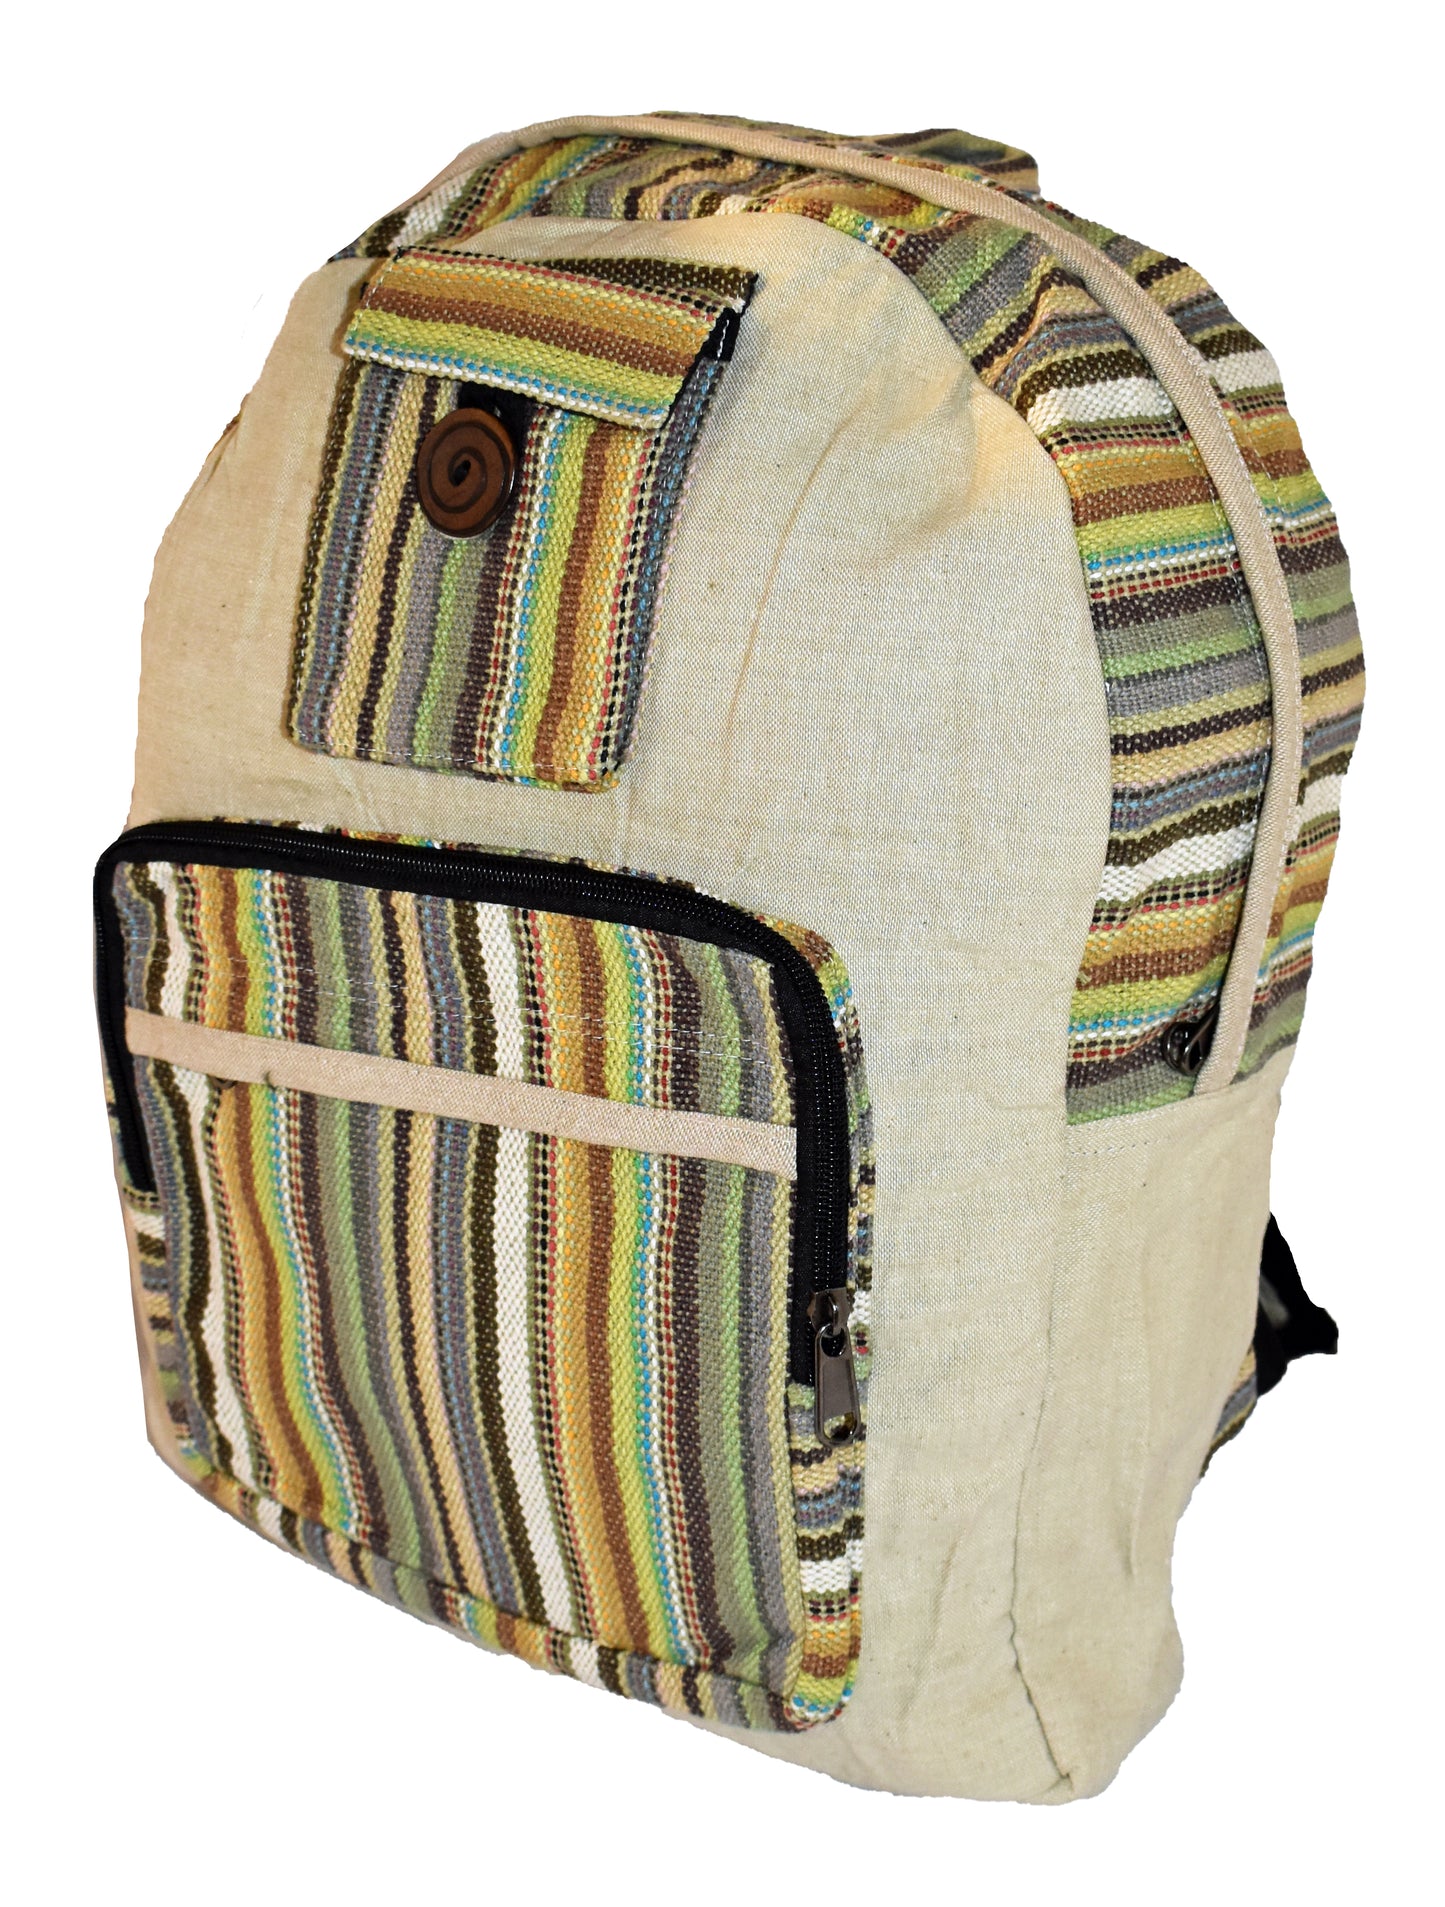 Striped Cotton Back Pack Bag